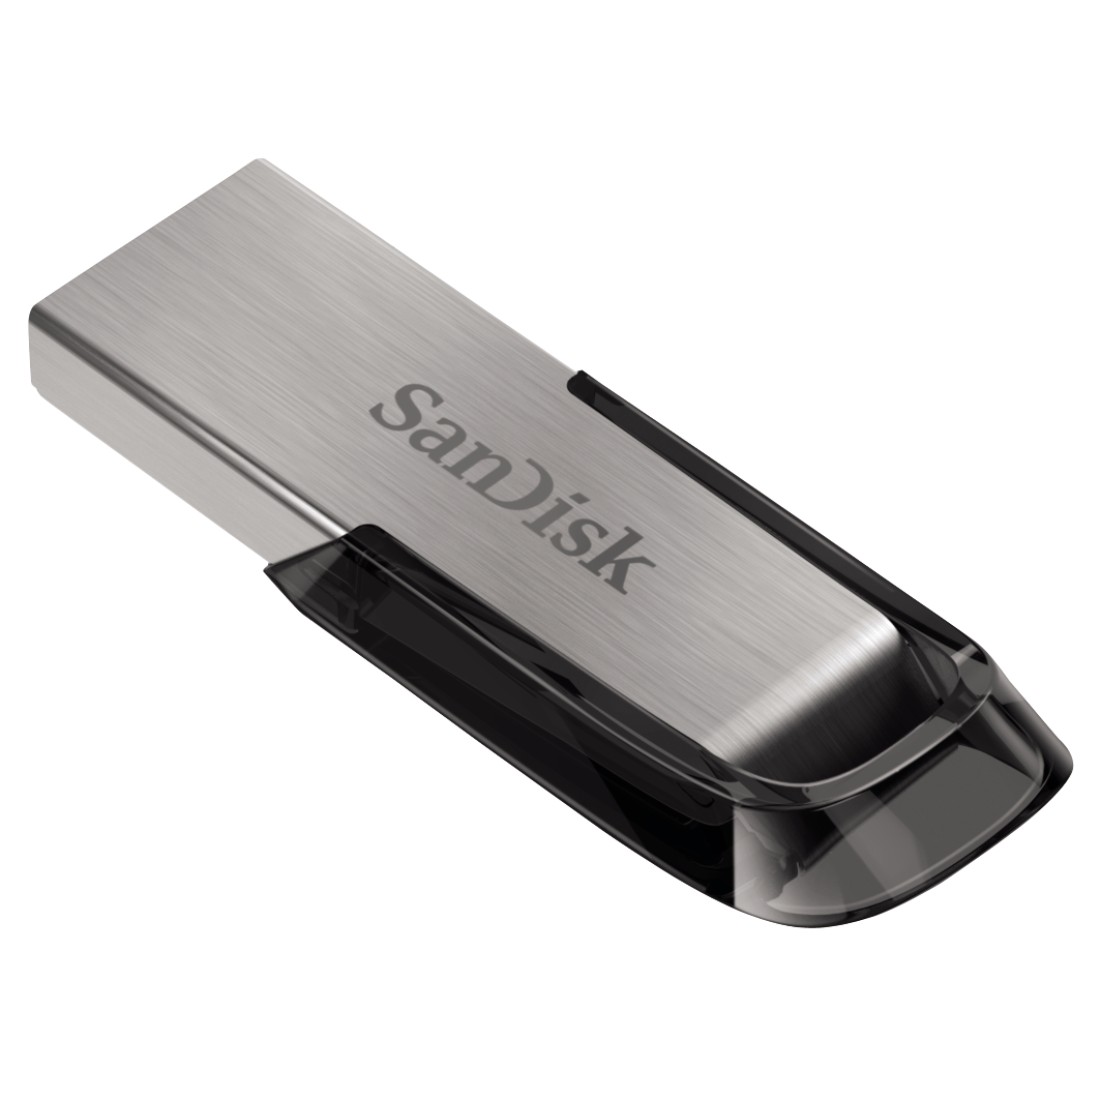 SanDisk Ultra Flair/ 32GB/ 150MBps/ USB 3.0/ USB-A/ Černá 